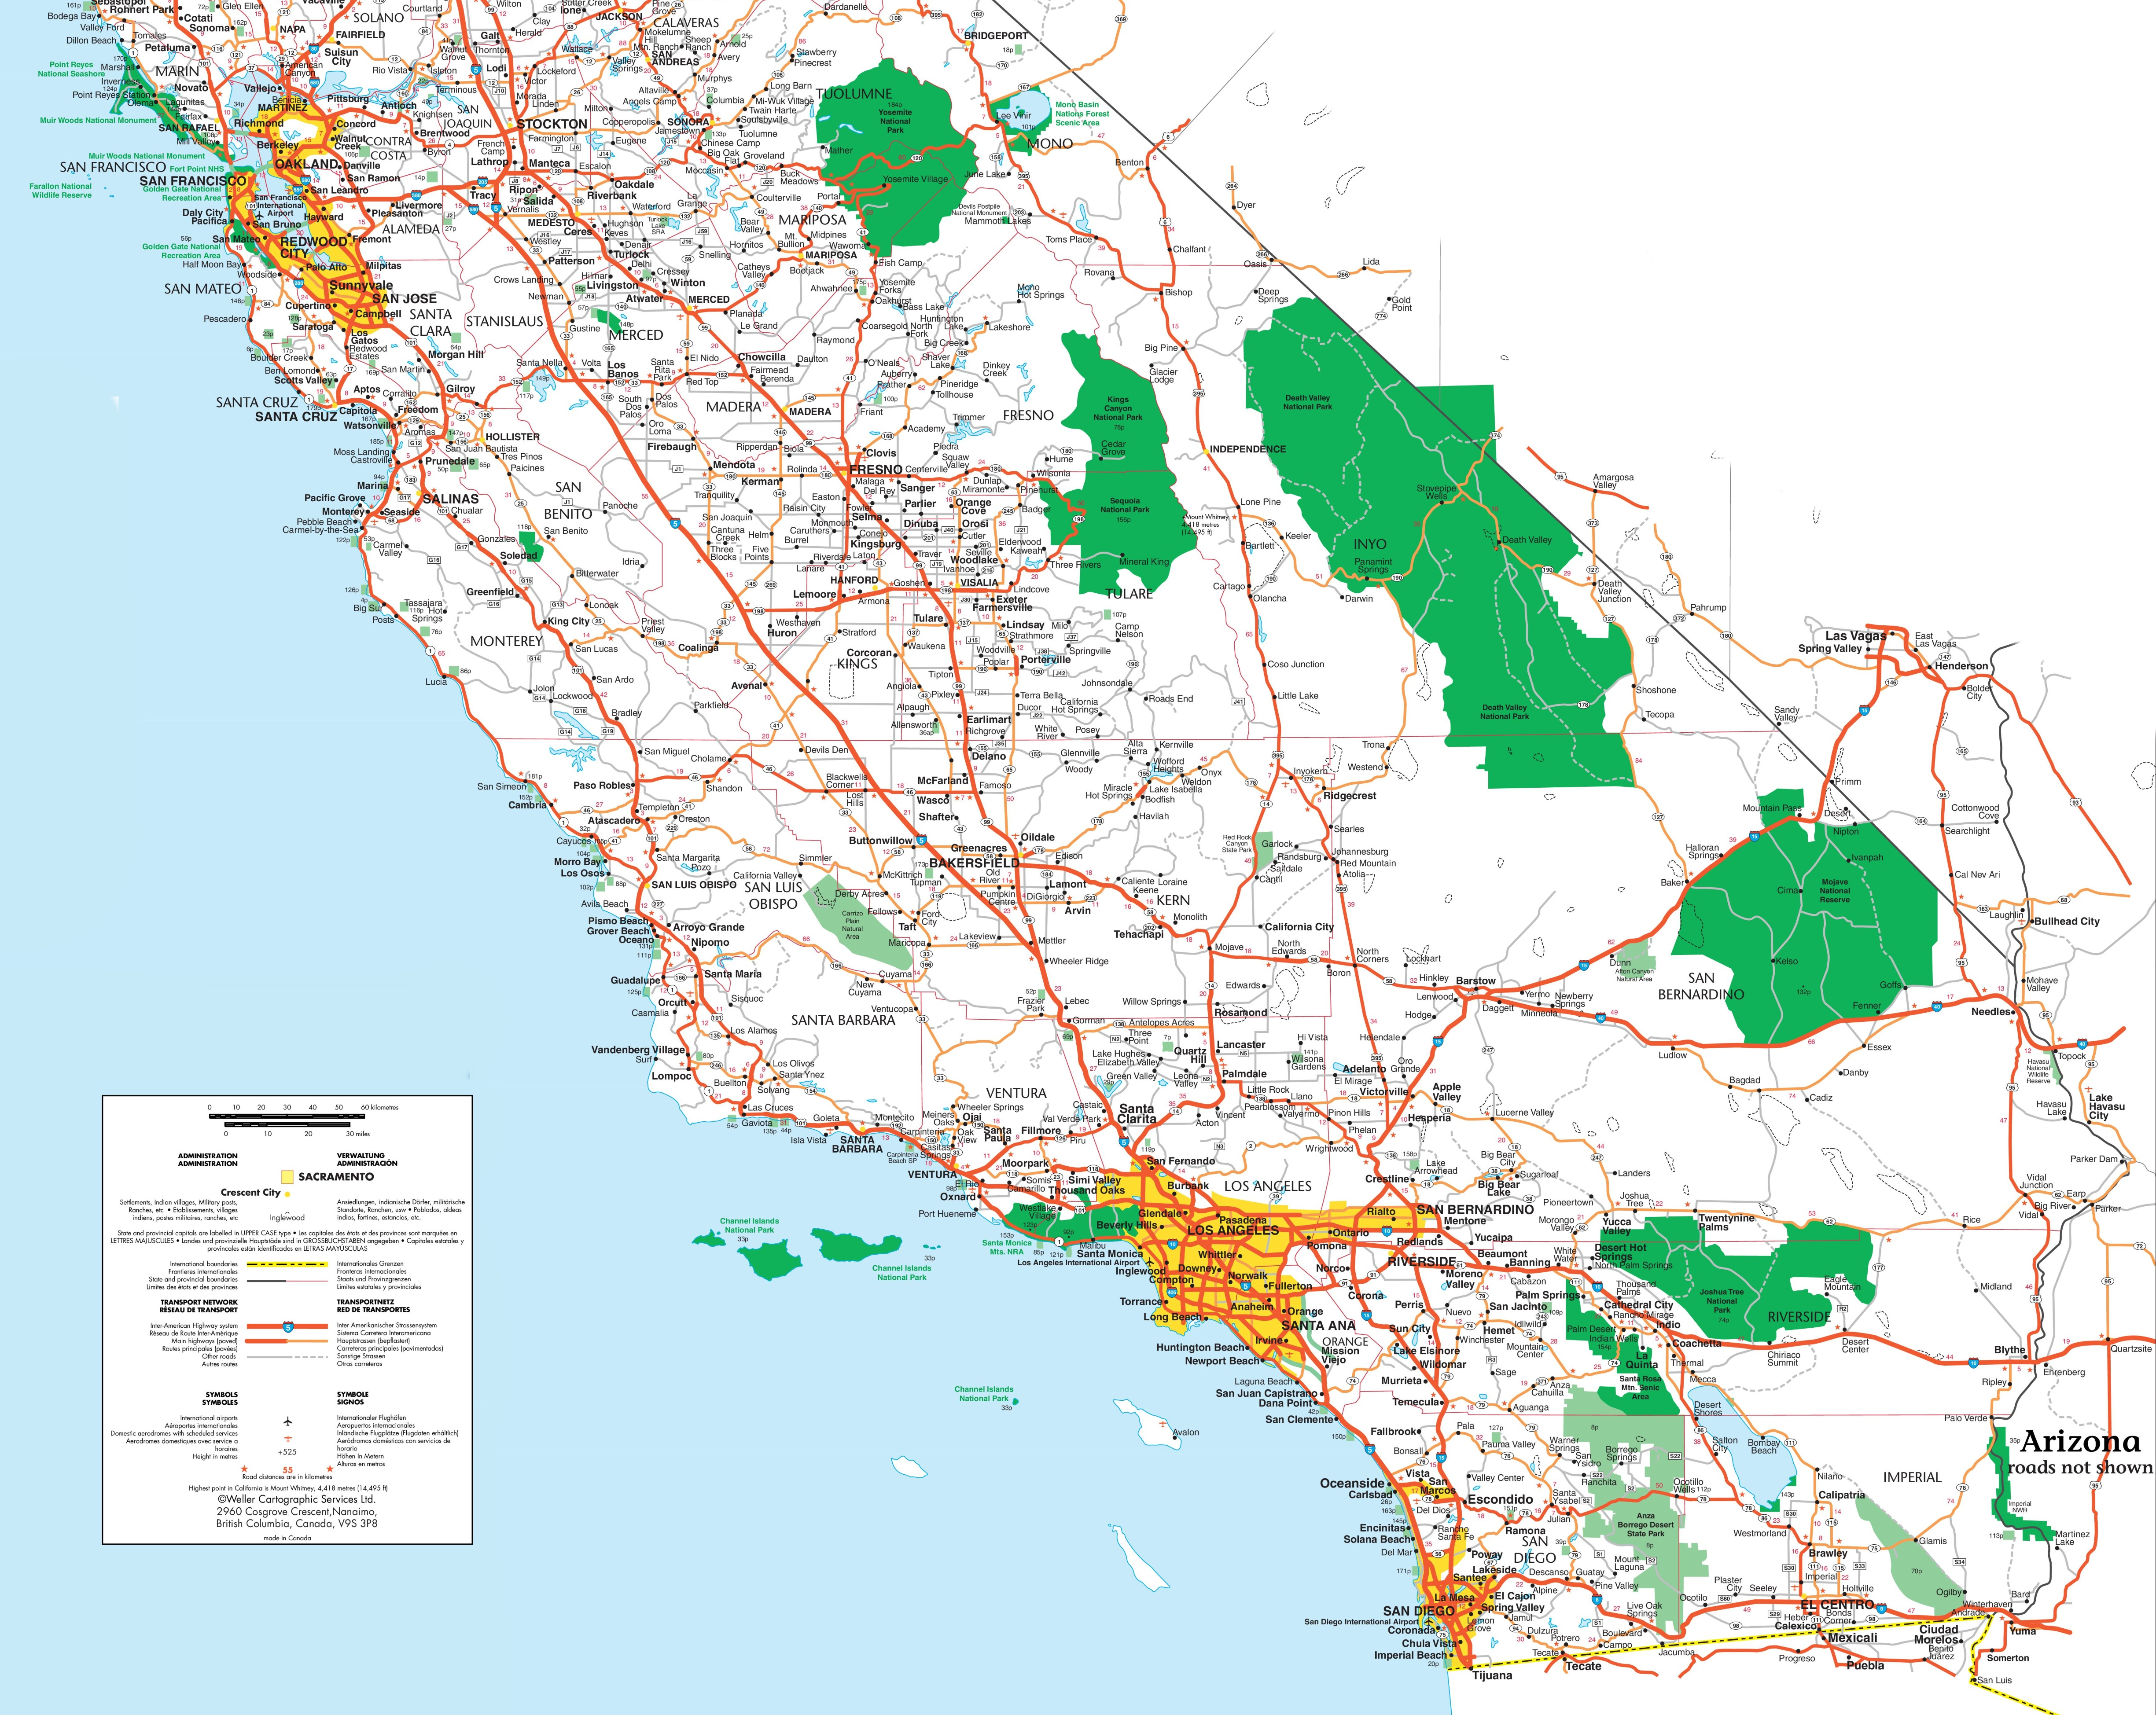 Southern California Beach Cities Map - Klipy - Map Of Southern California Beach Cities